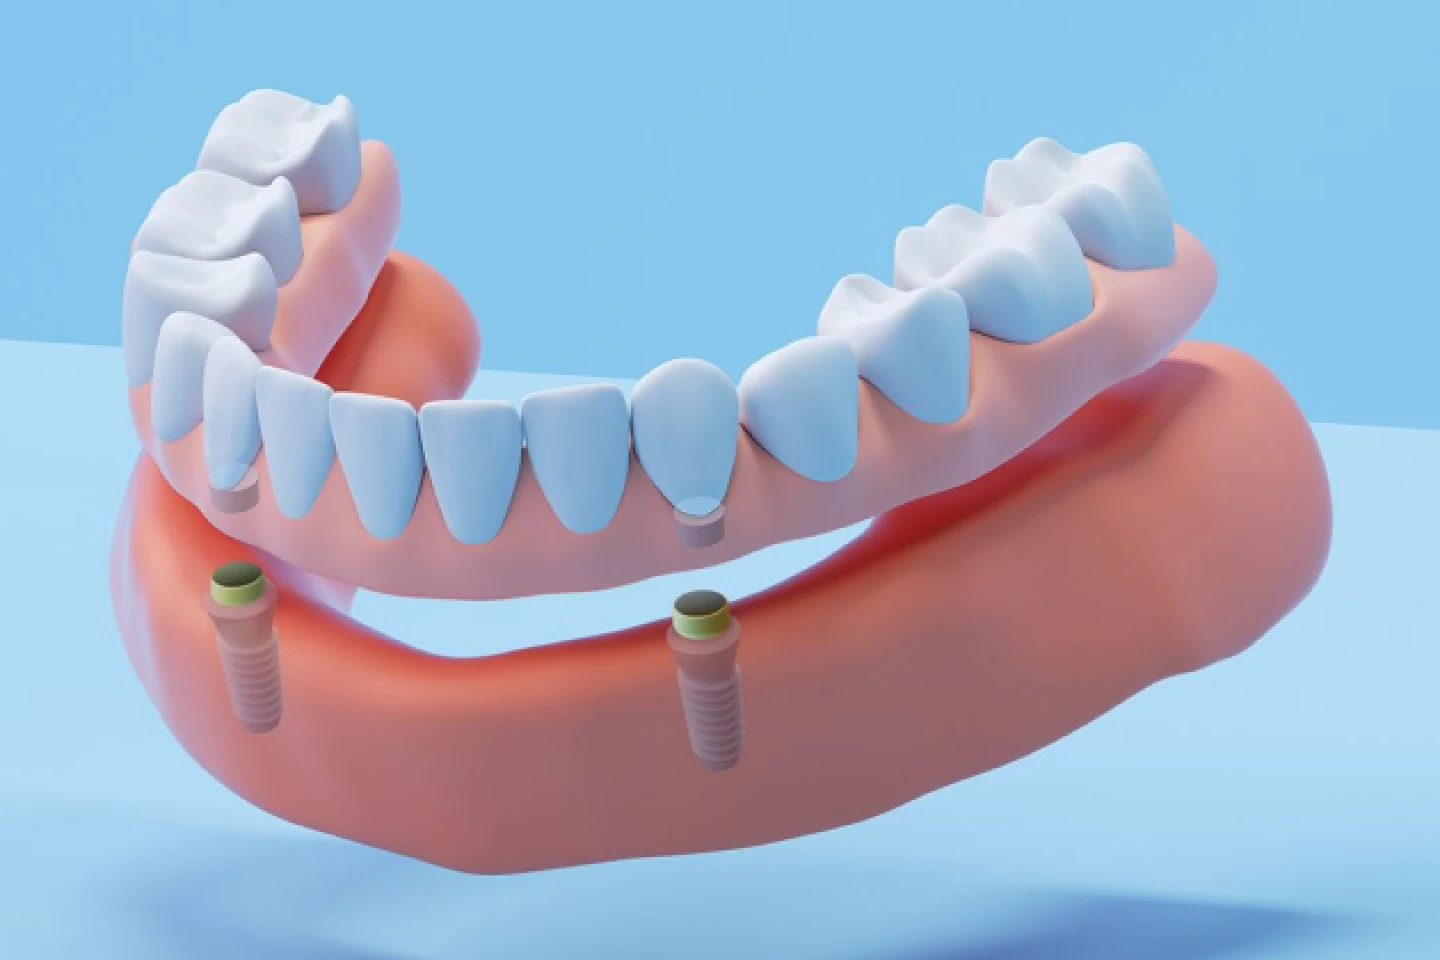 Aspen Dental snap-in dentures. 